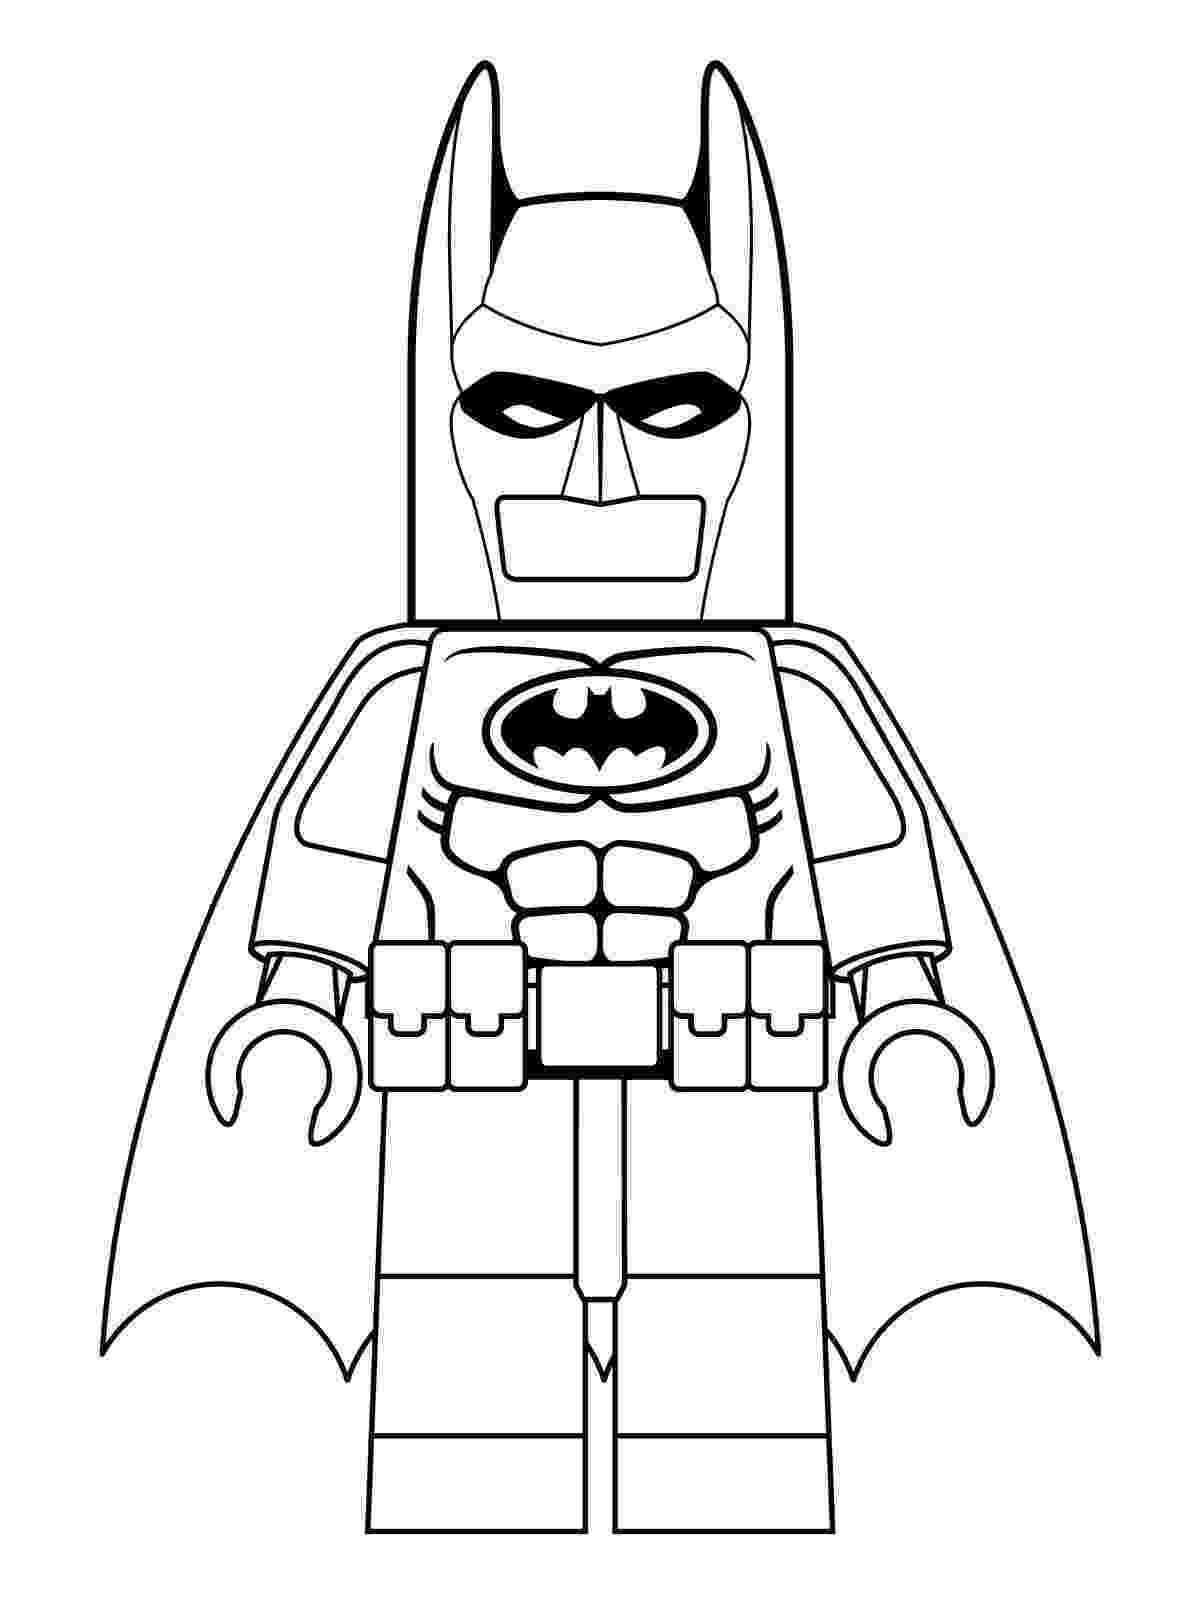 colouring batman lego batman coloring pages best coloring pages for kids batman colouring 1 1